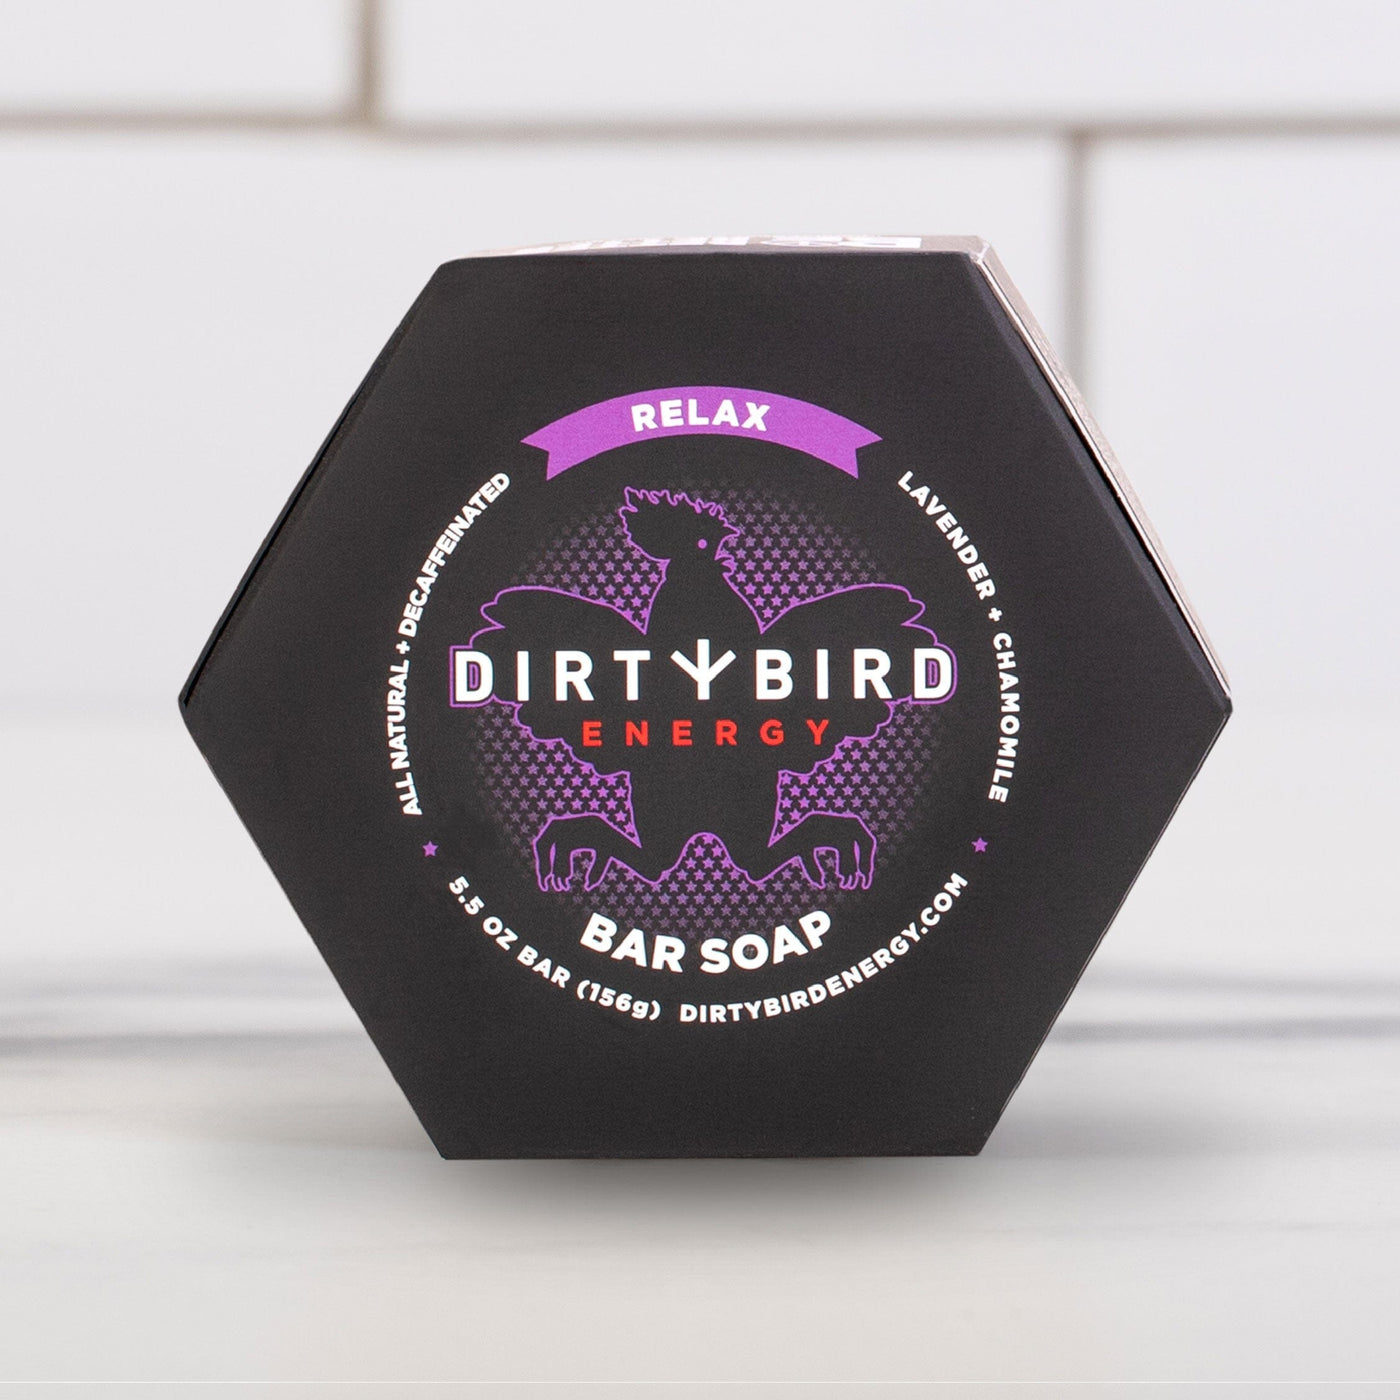 DIRTYBIRD ENERGY Relax Soap Bar Soap